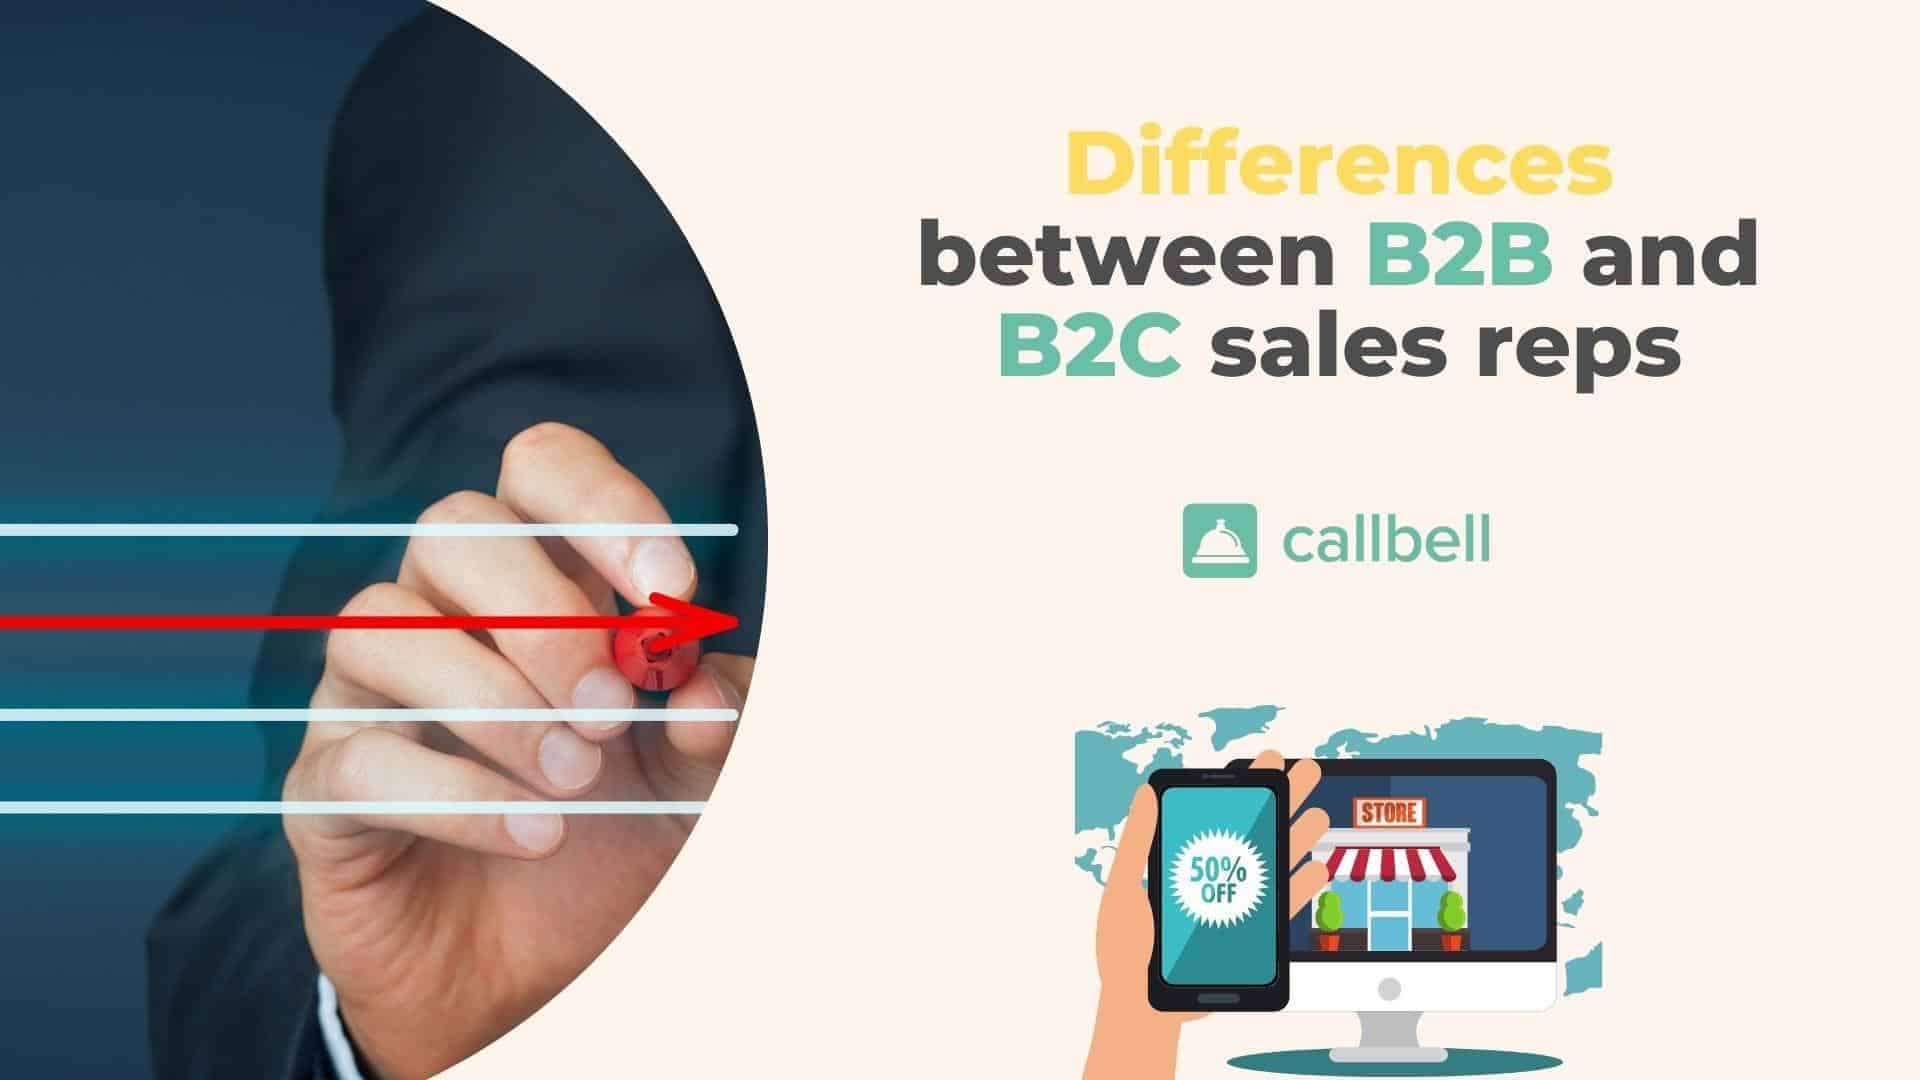 B2C sales and B2B sales